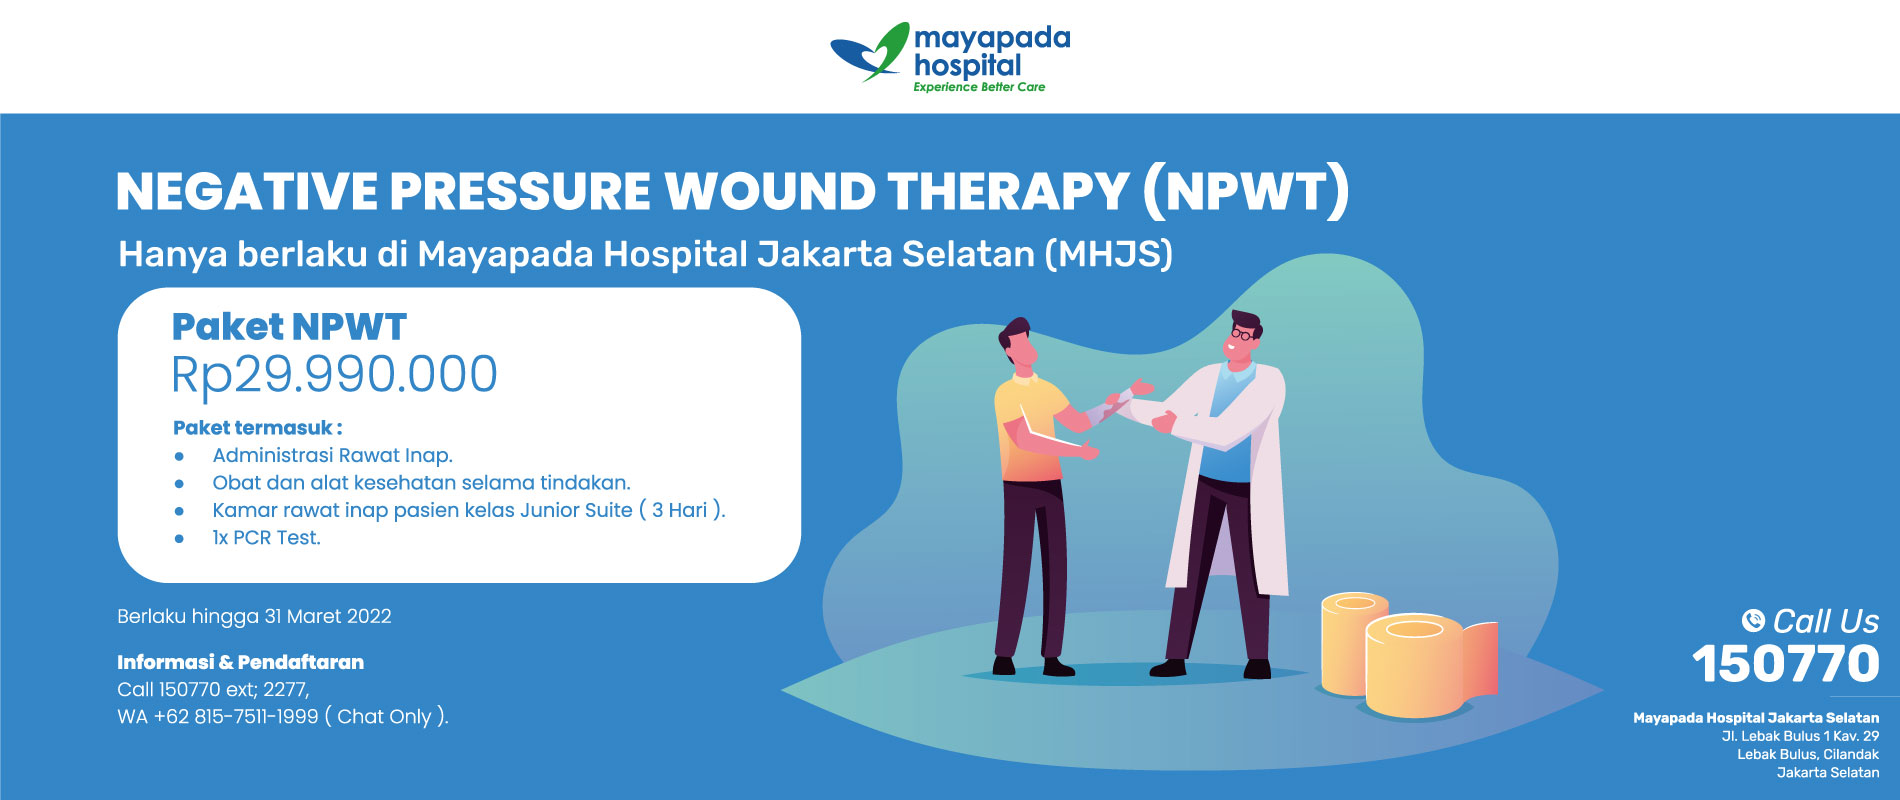 Negative Pressure Wound Therapy (NPWT) di MHJS IMG